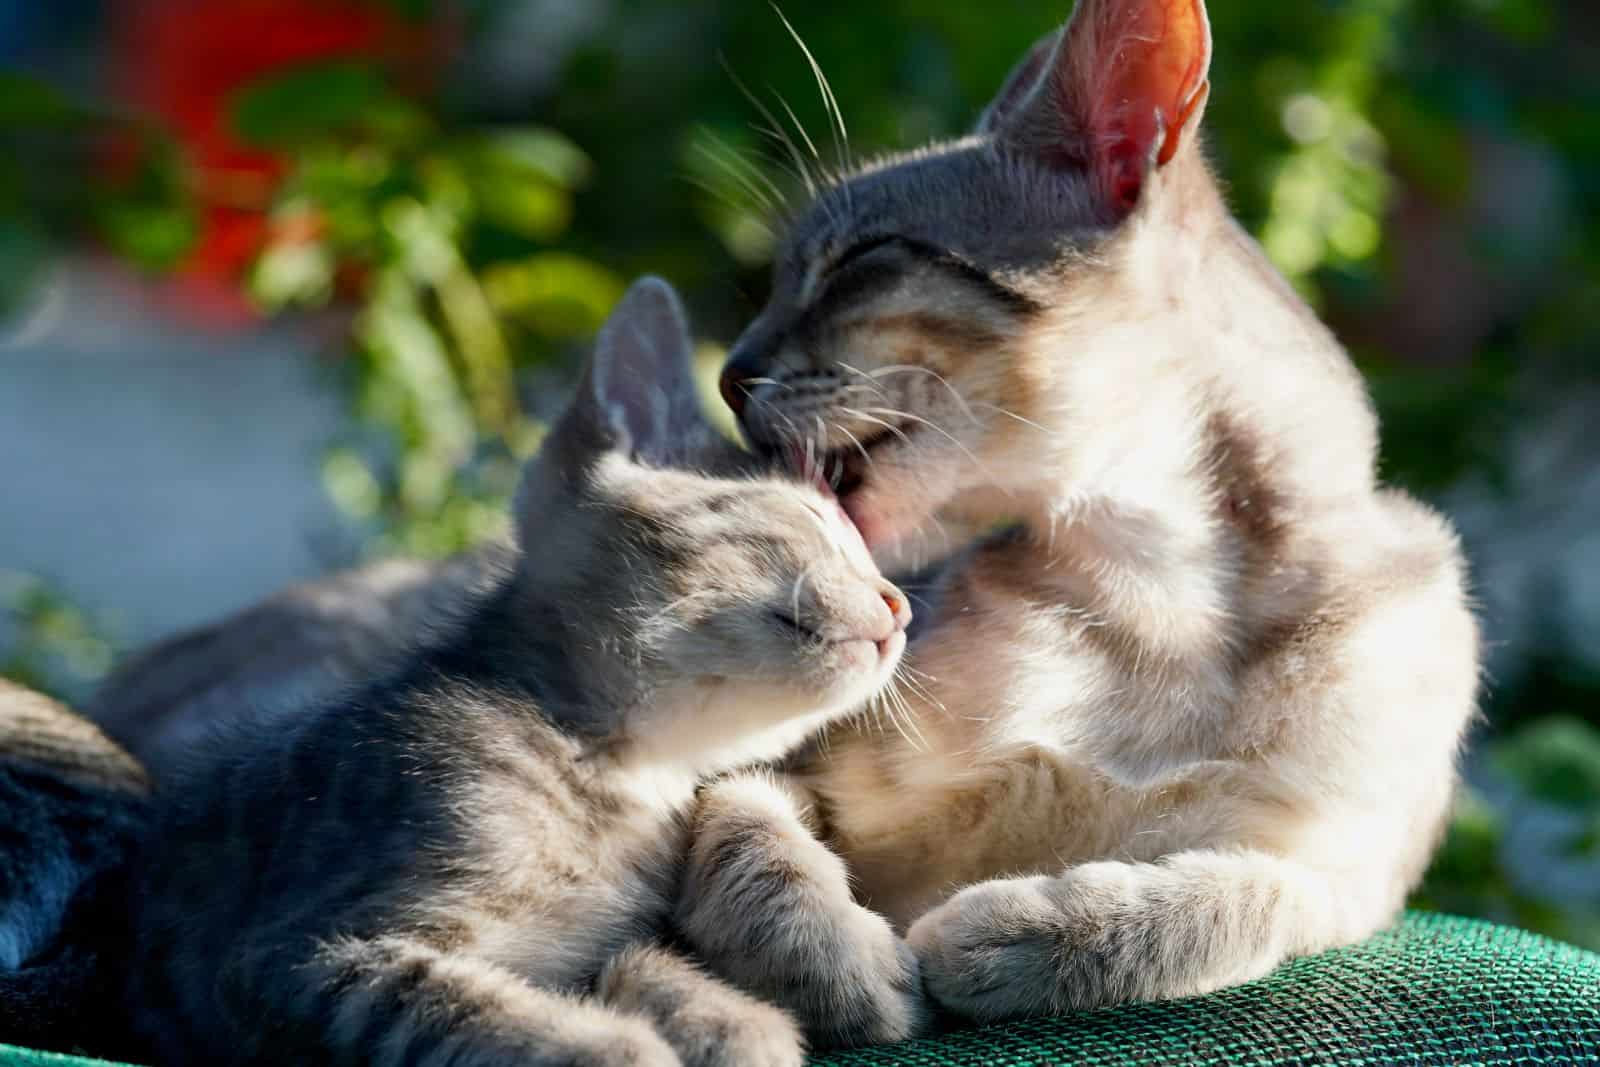 cat licking kitten